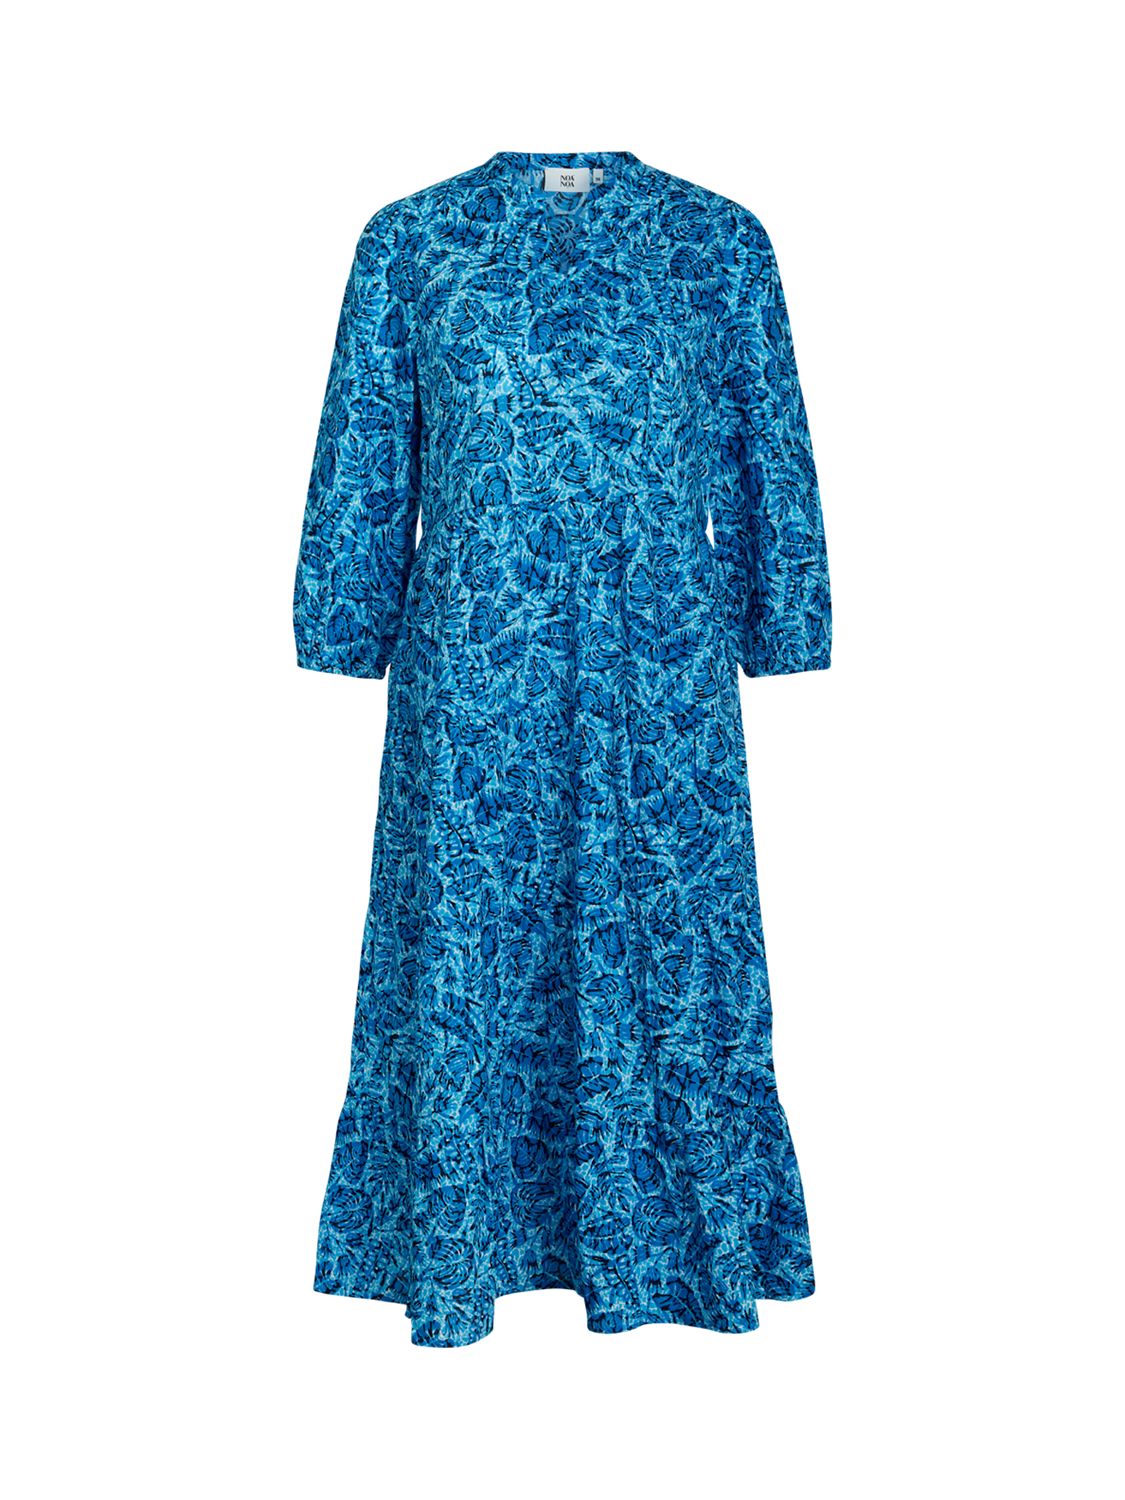 Noa Noa Annie Leaf Print Dress, Blue at John Lewis & Partners